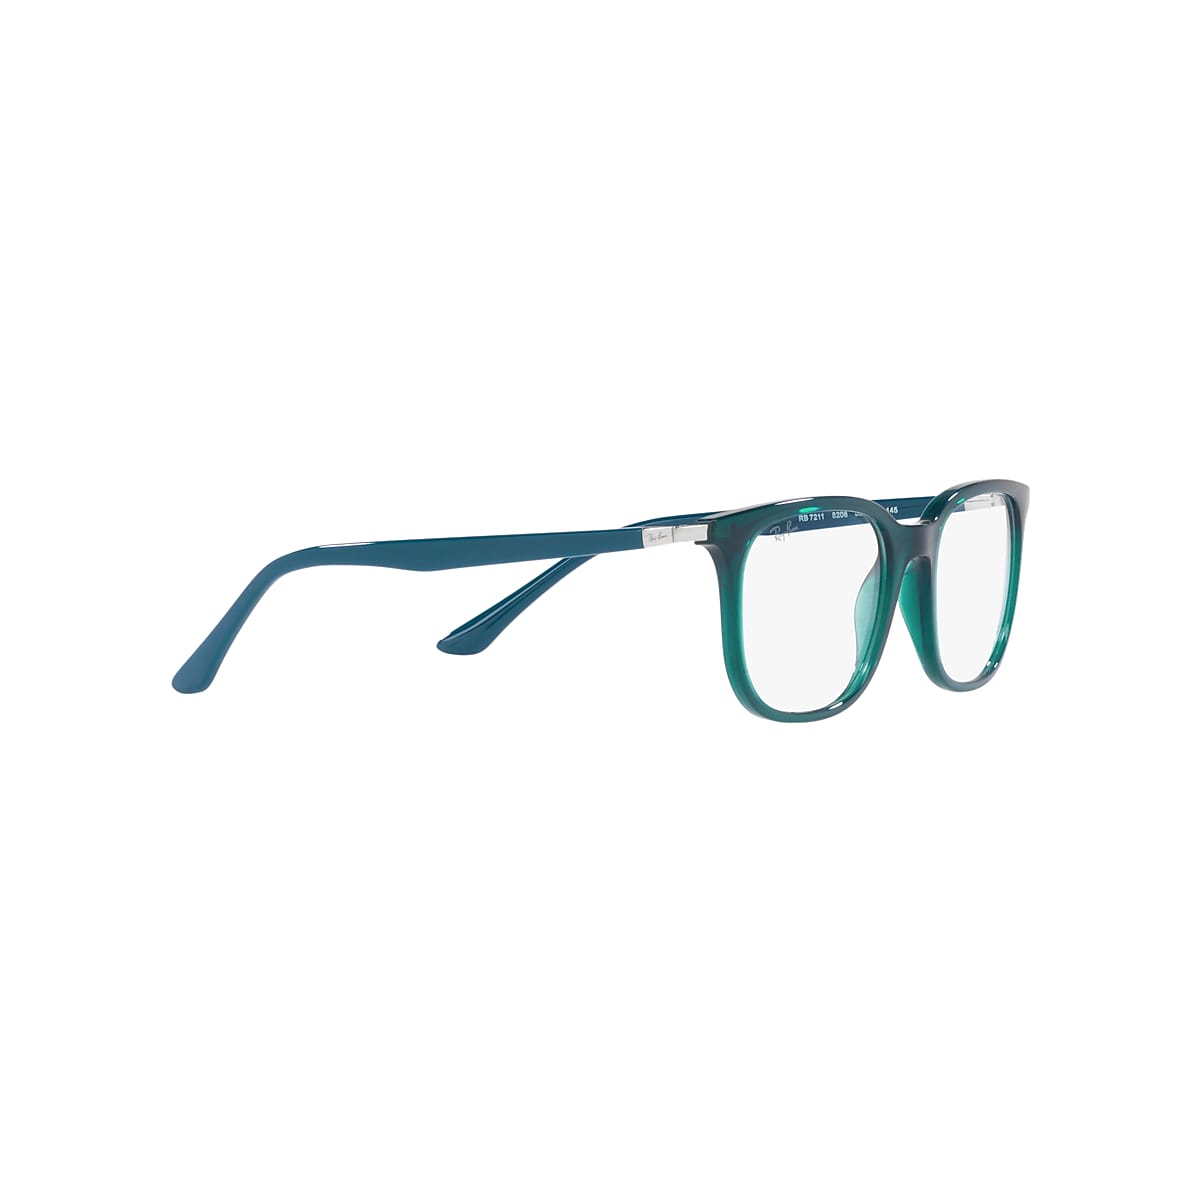 RB7211 OPTICS Eyeglasses with Transparent Turquoise Frame 